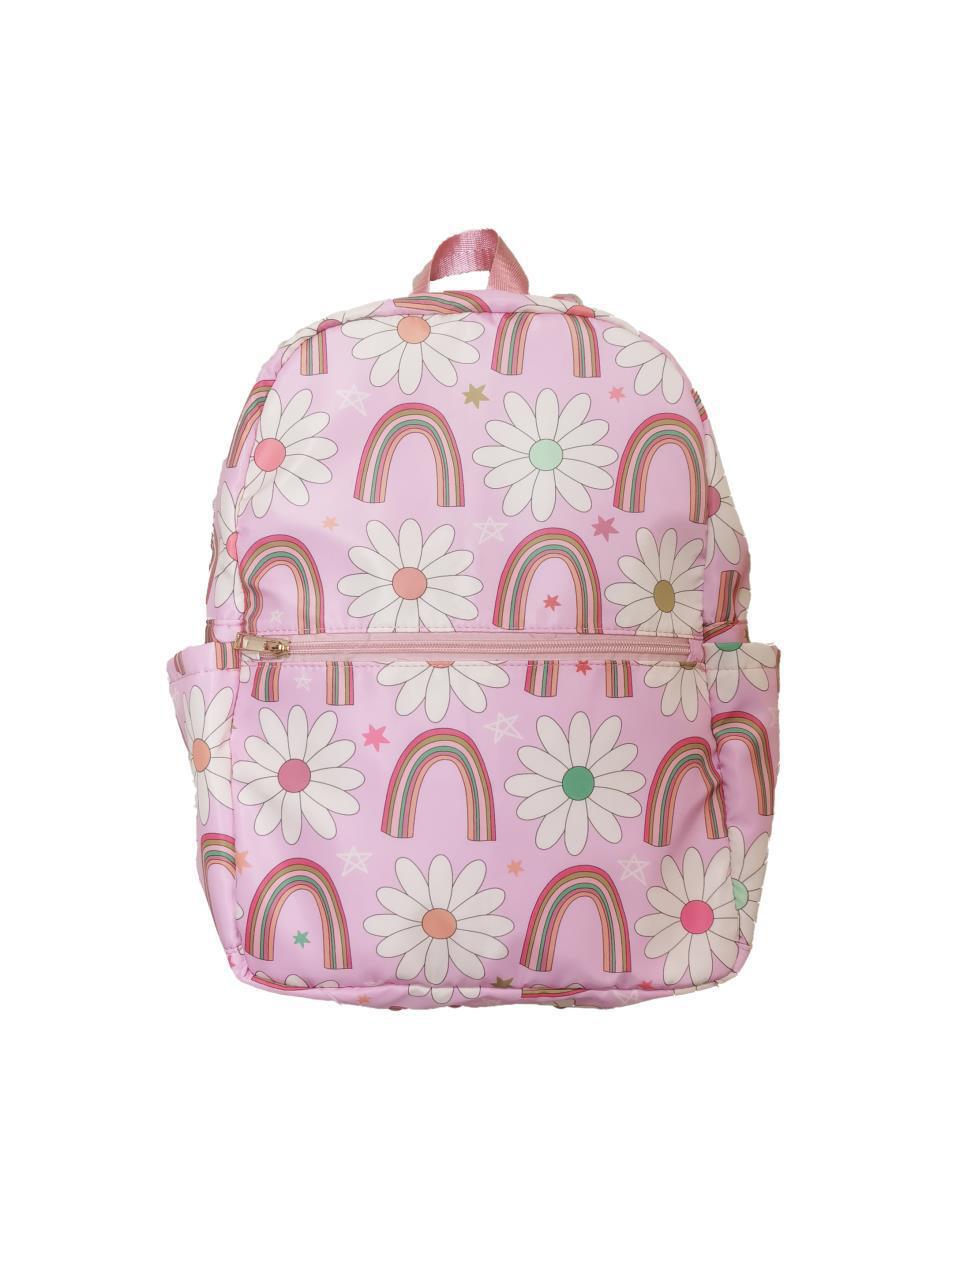 Rainbow Daisies Backpack